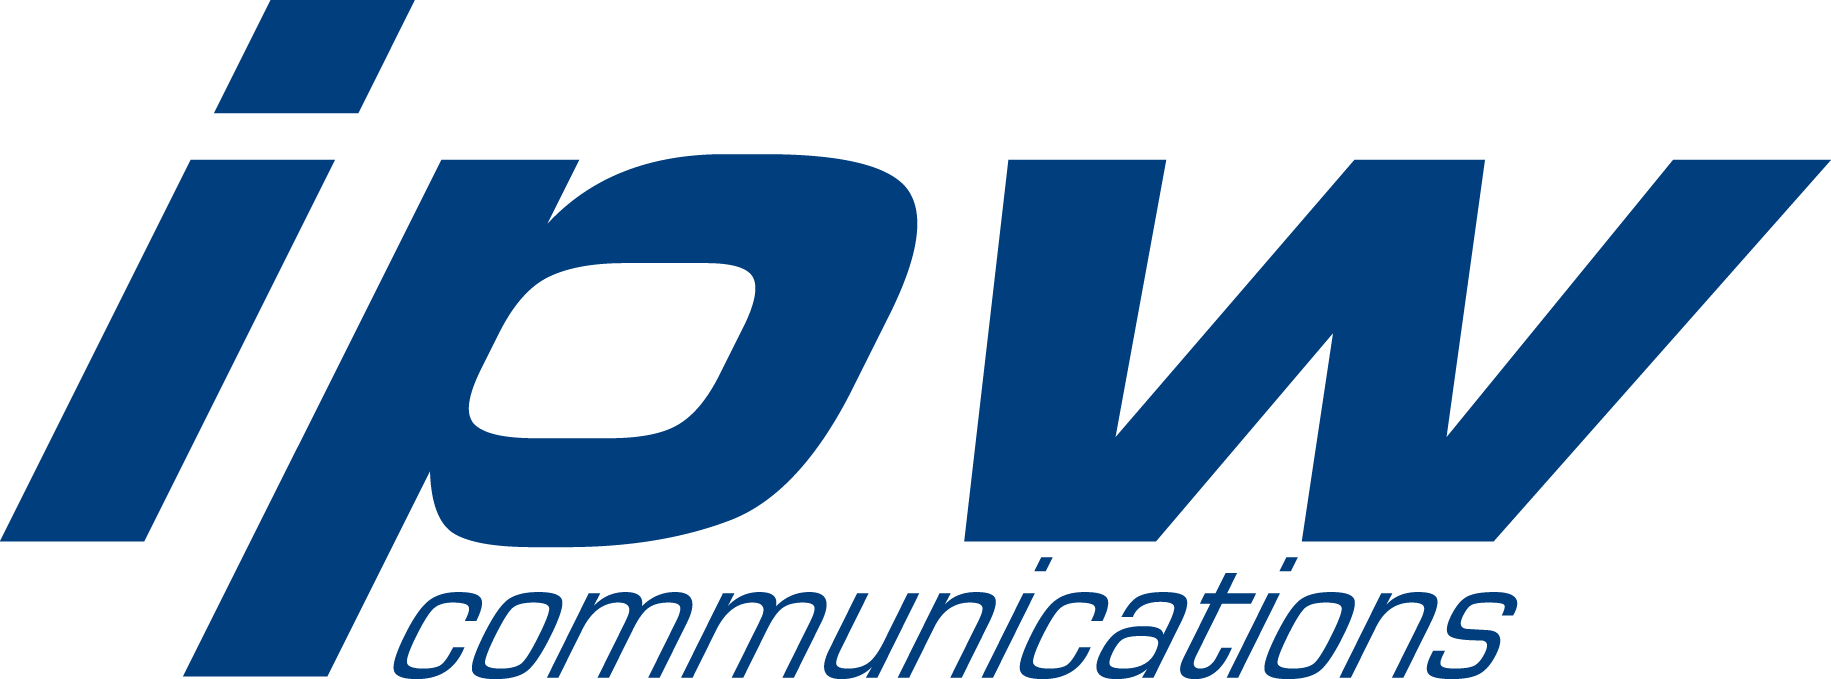 ipw communication and usps png logo #5692